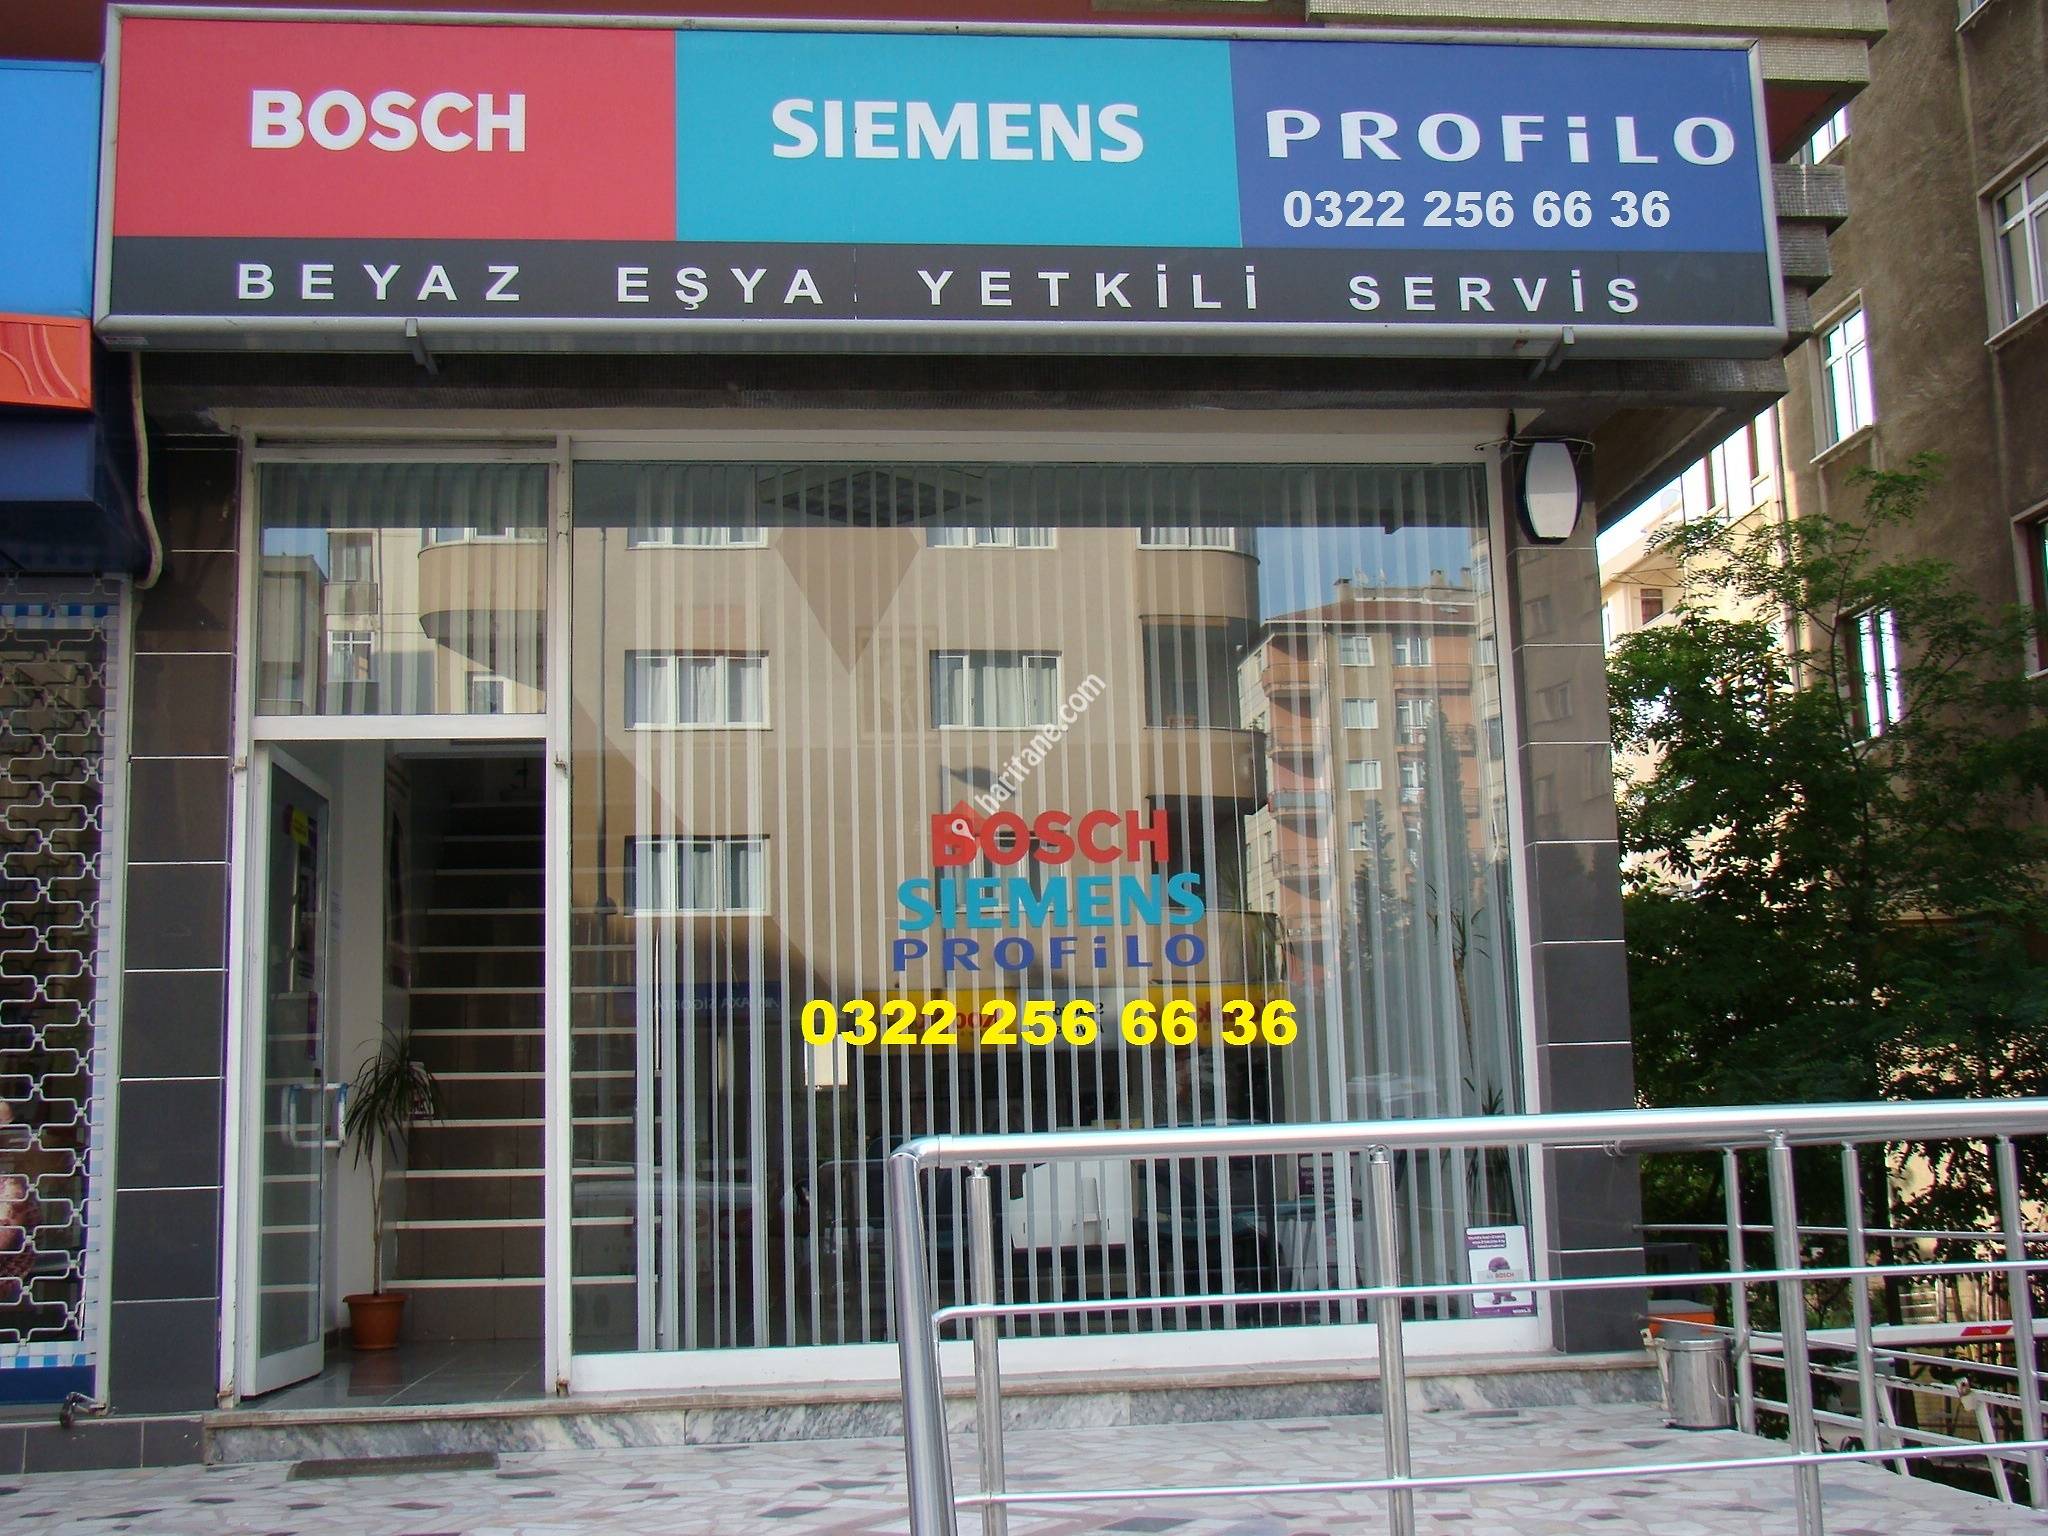 Adana Bosch Yetkili Servisi